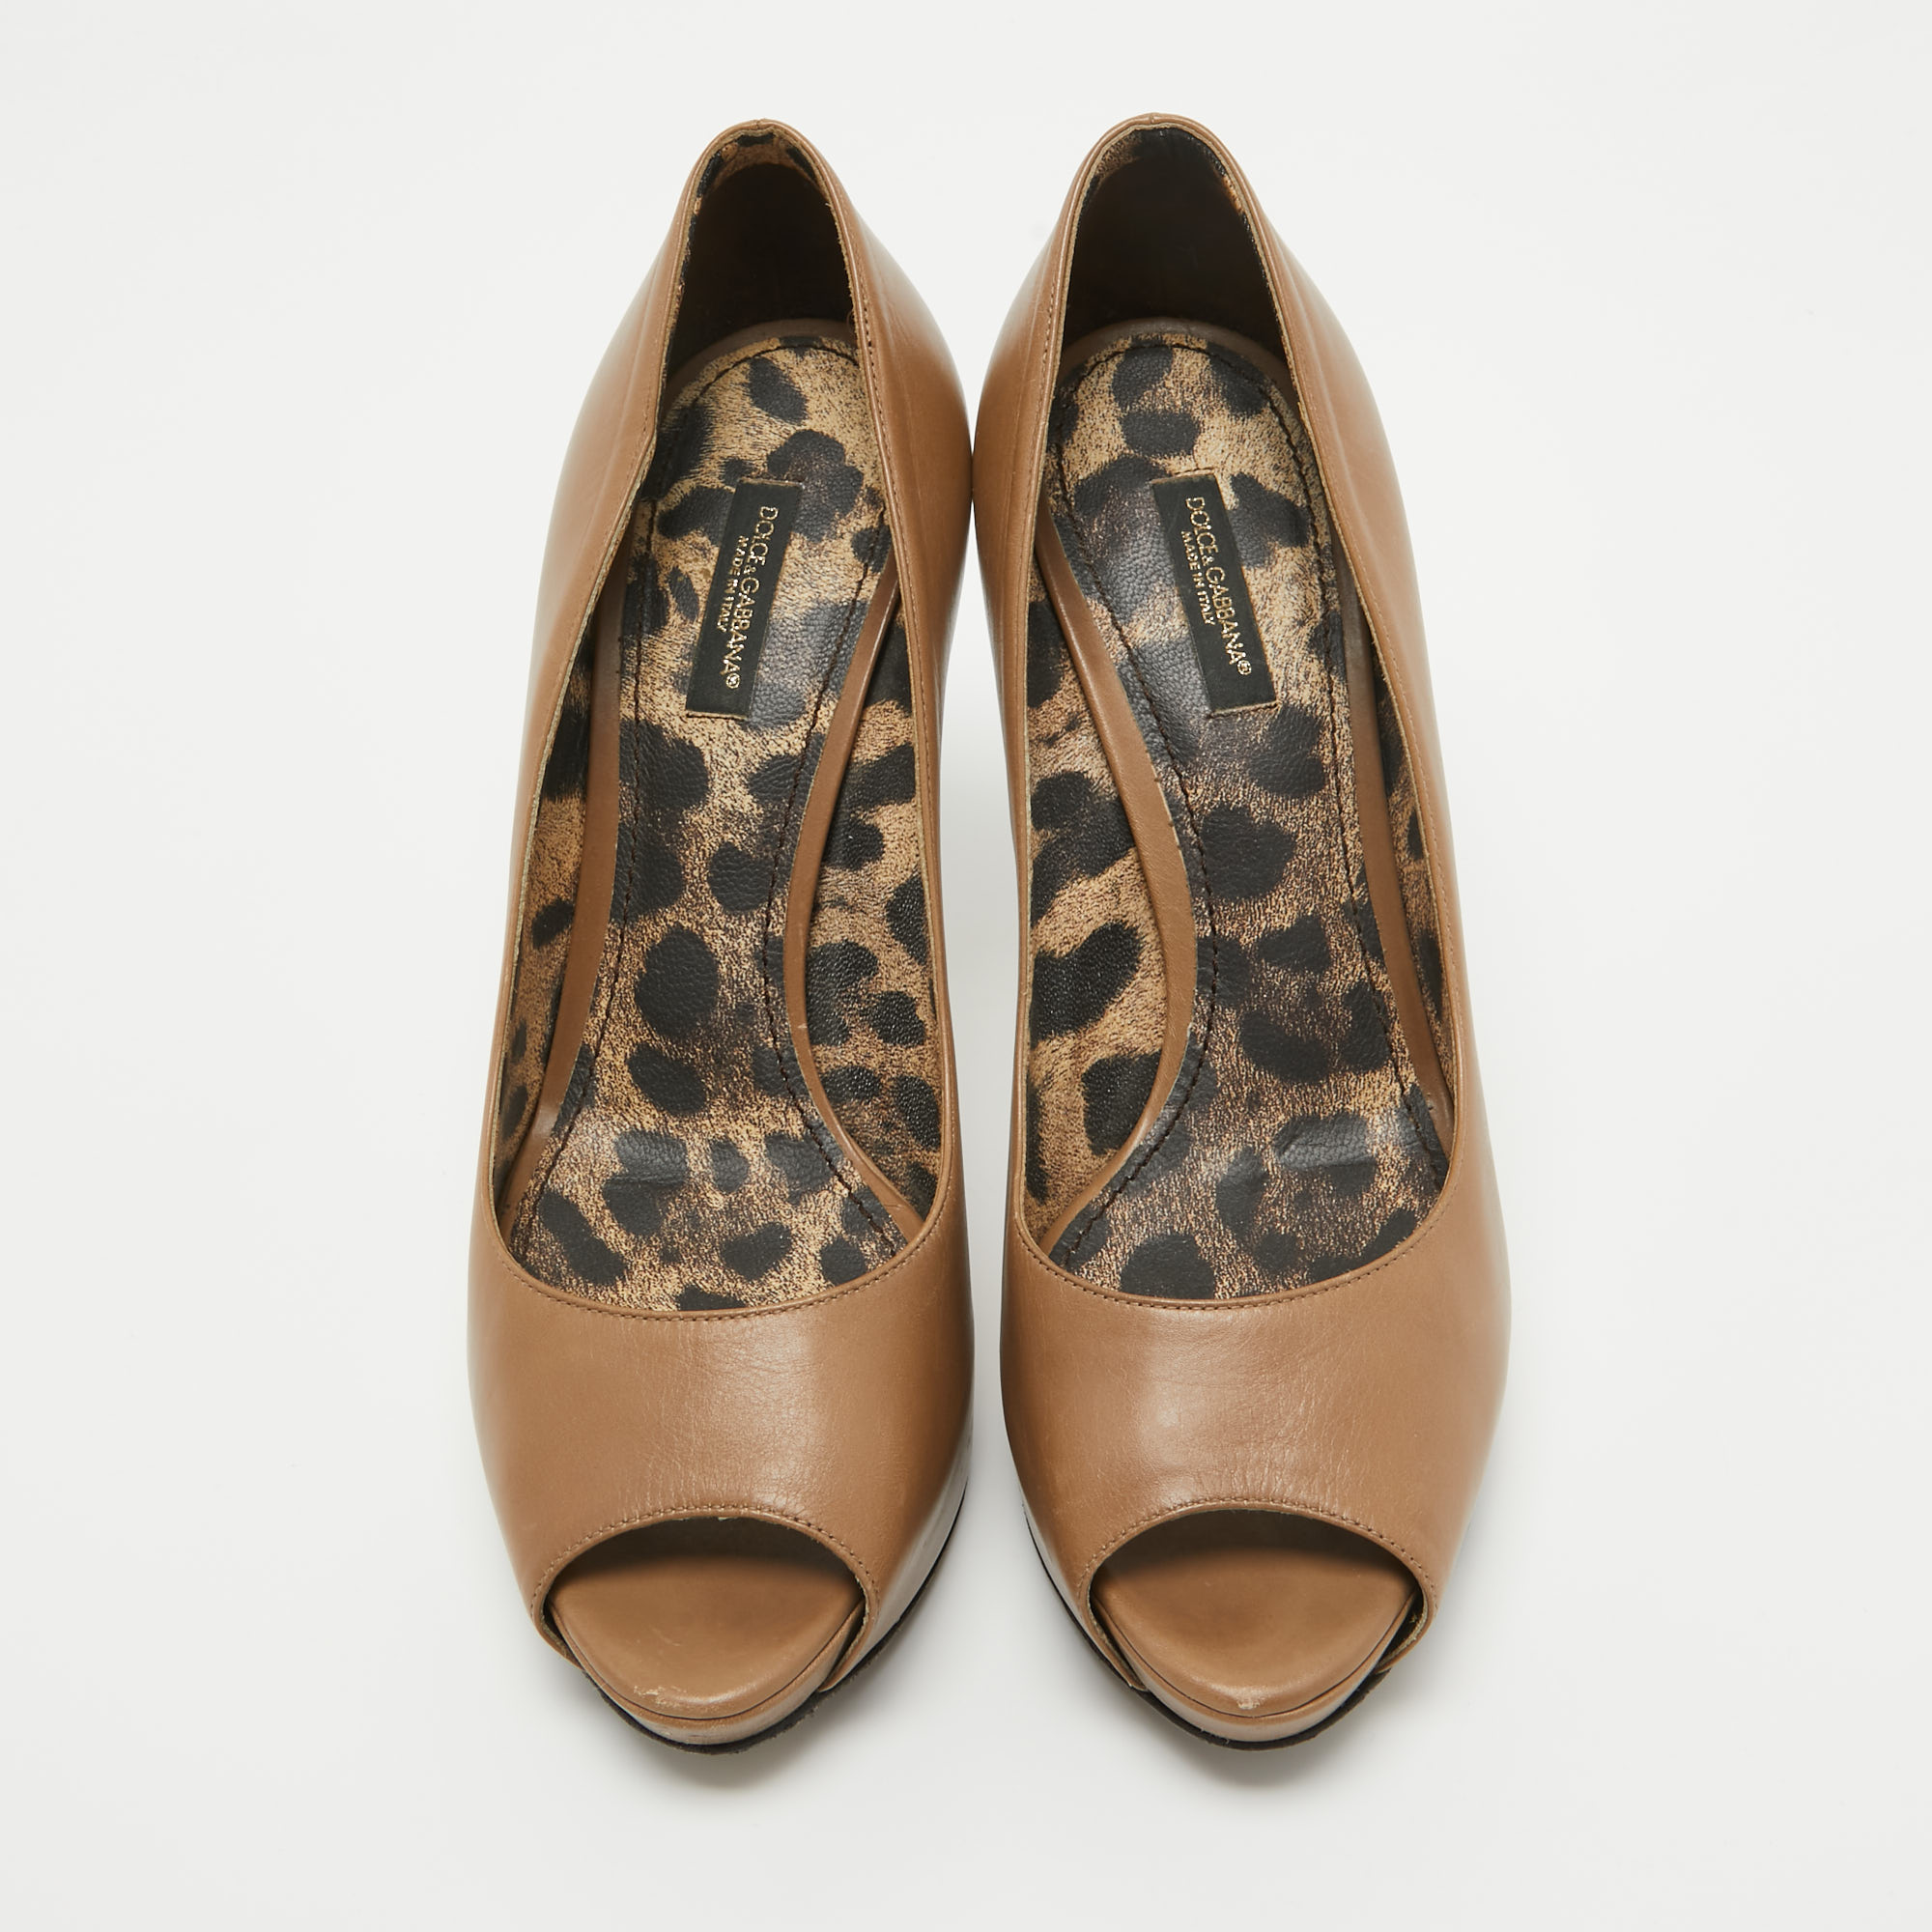 Dolce & Gabbana Light Brown Leather Peep Toe Platform Pumps Size 38.5